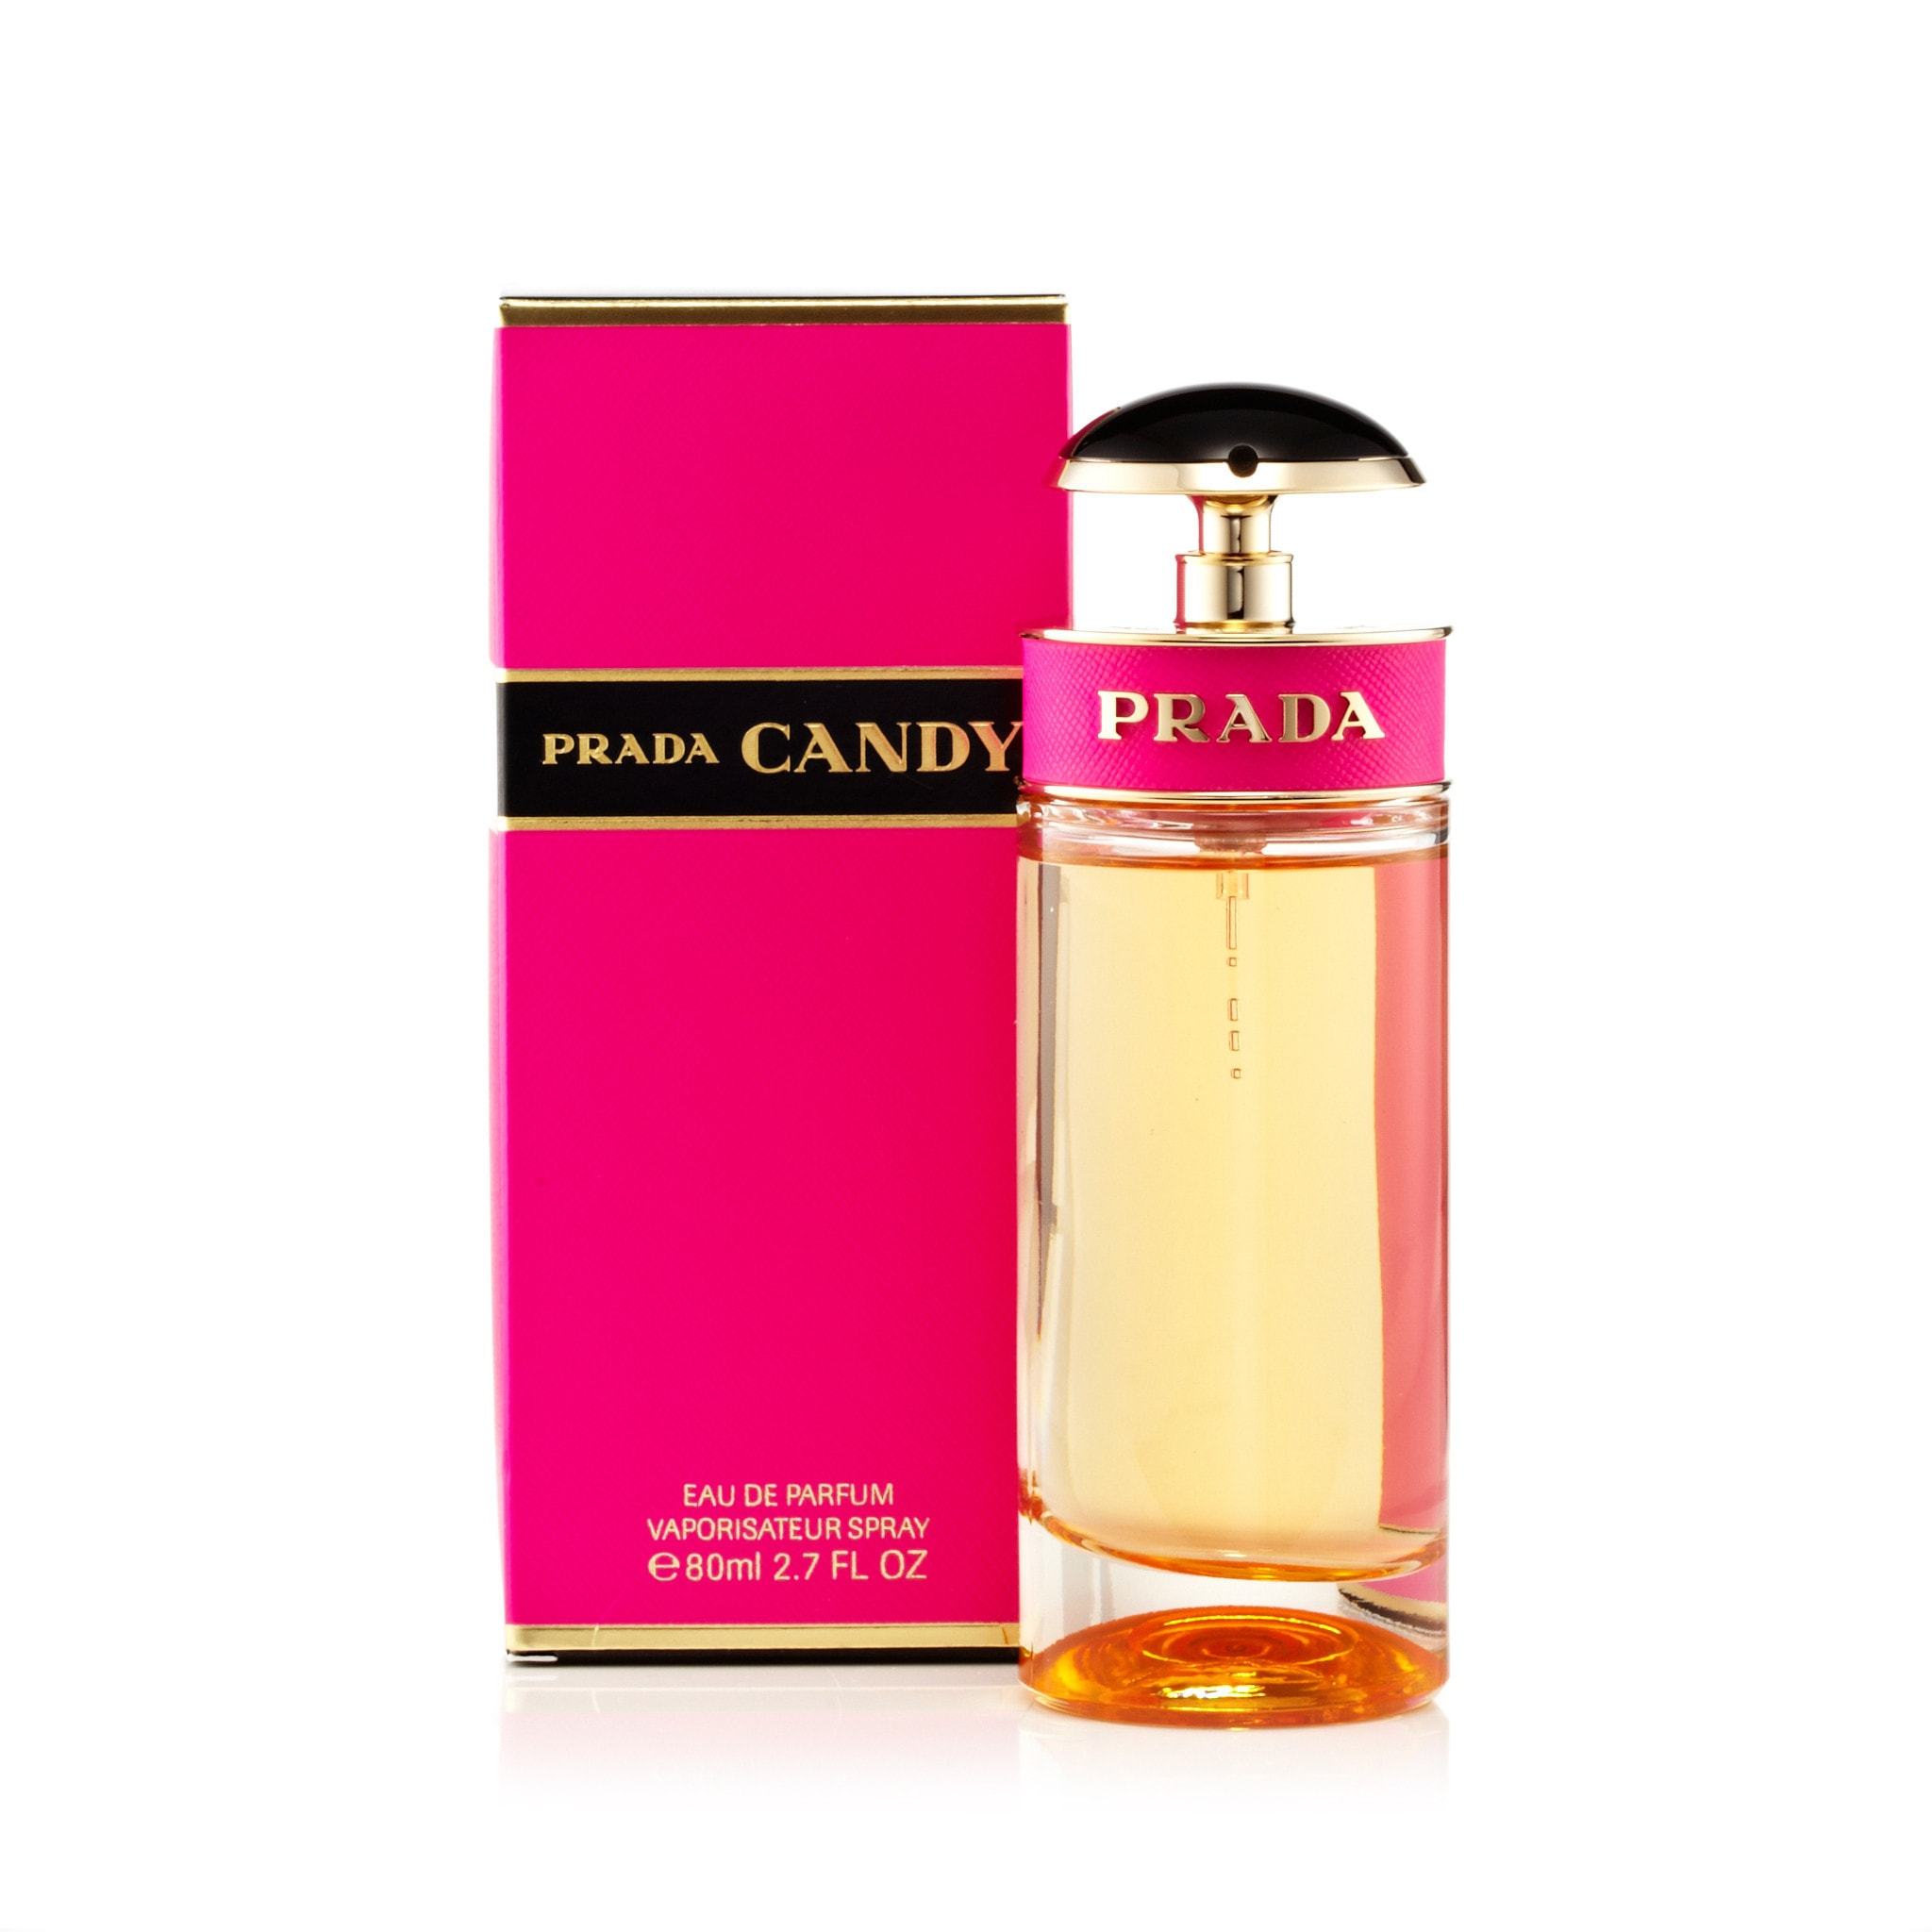 prada candy women's perfume